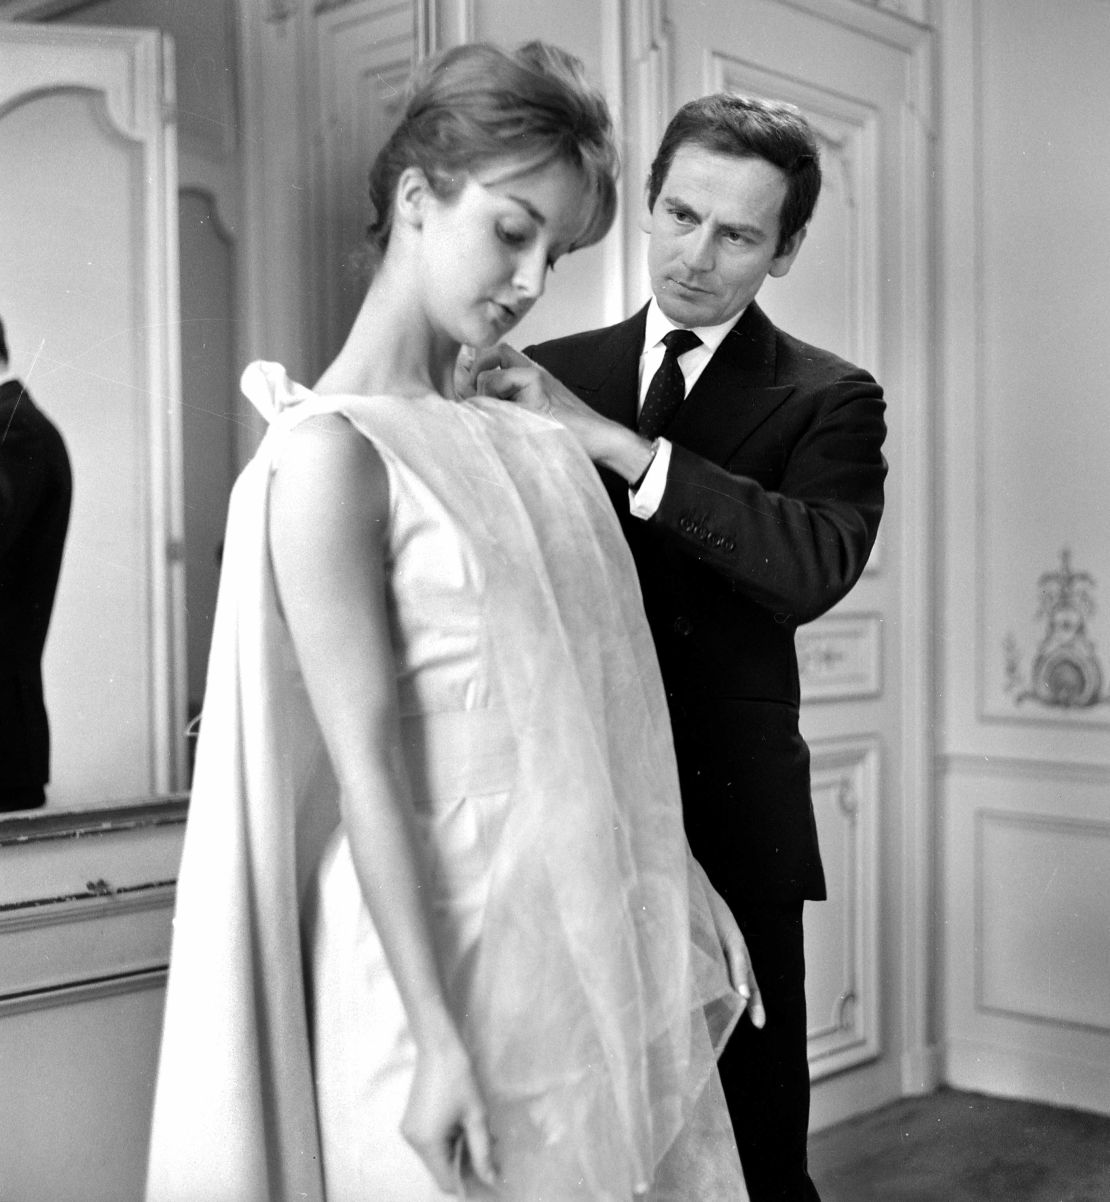 Pierre Cardin creating a dress for Danielle Lebrun in 1962.